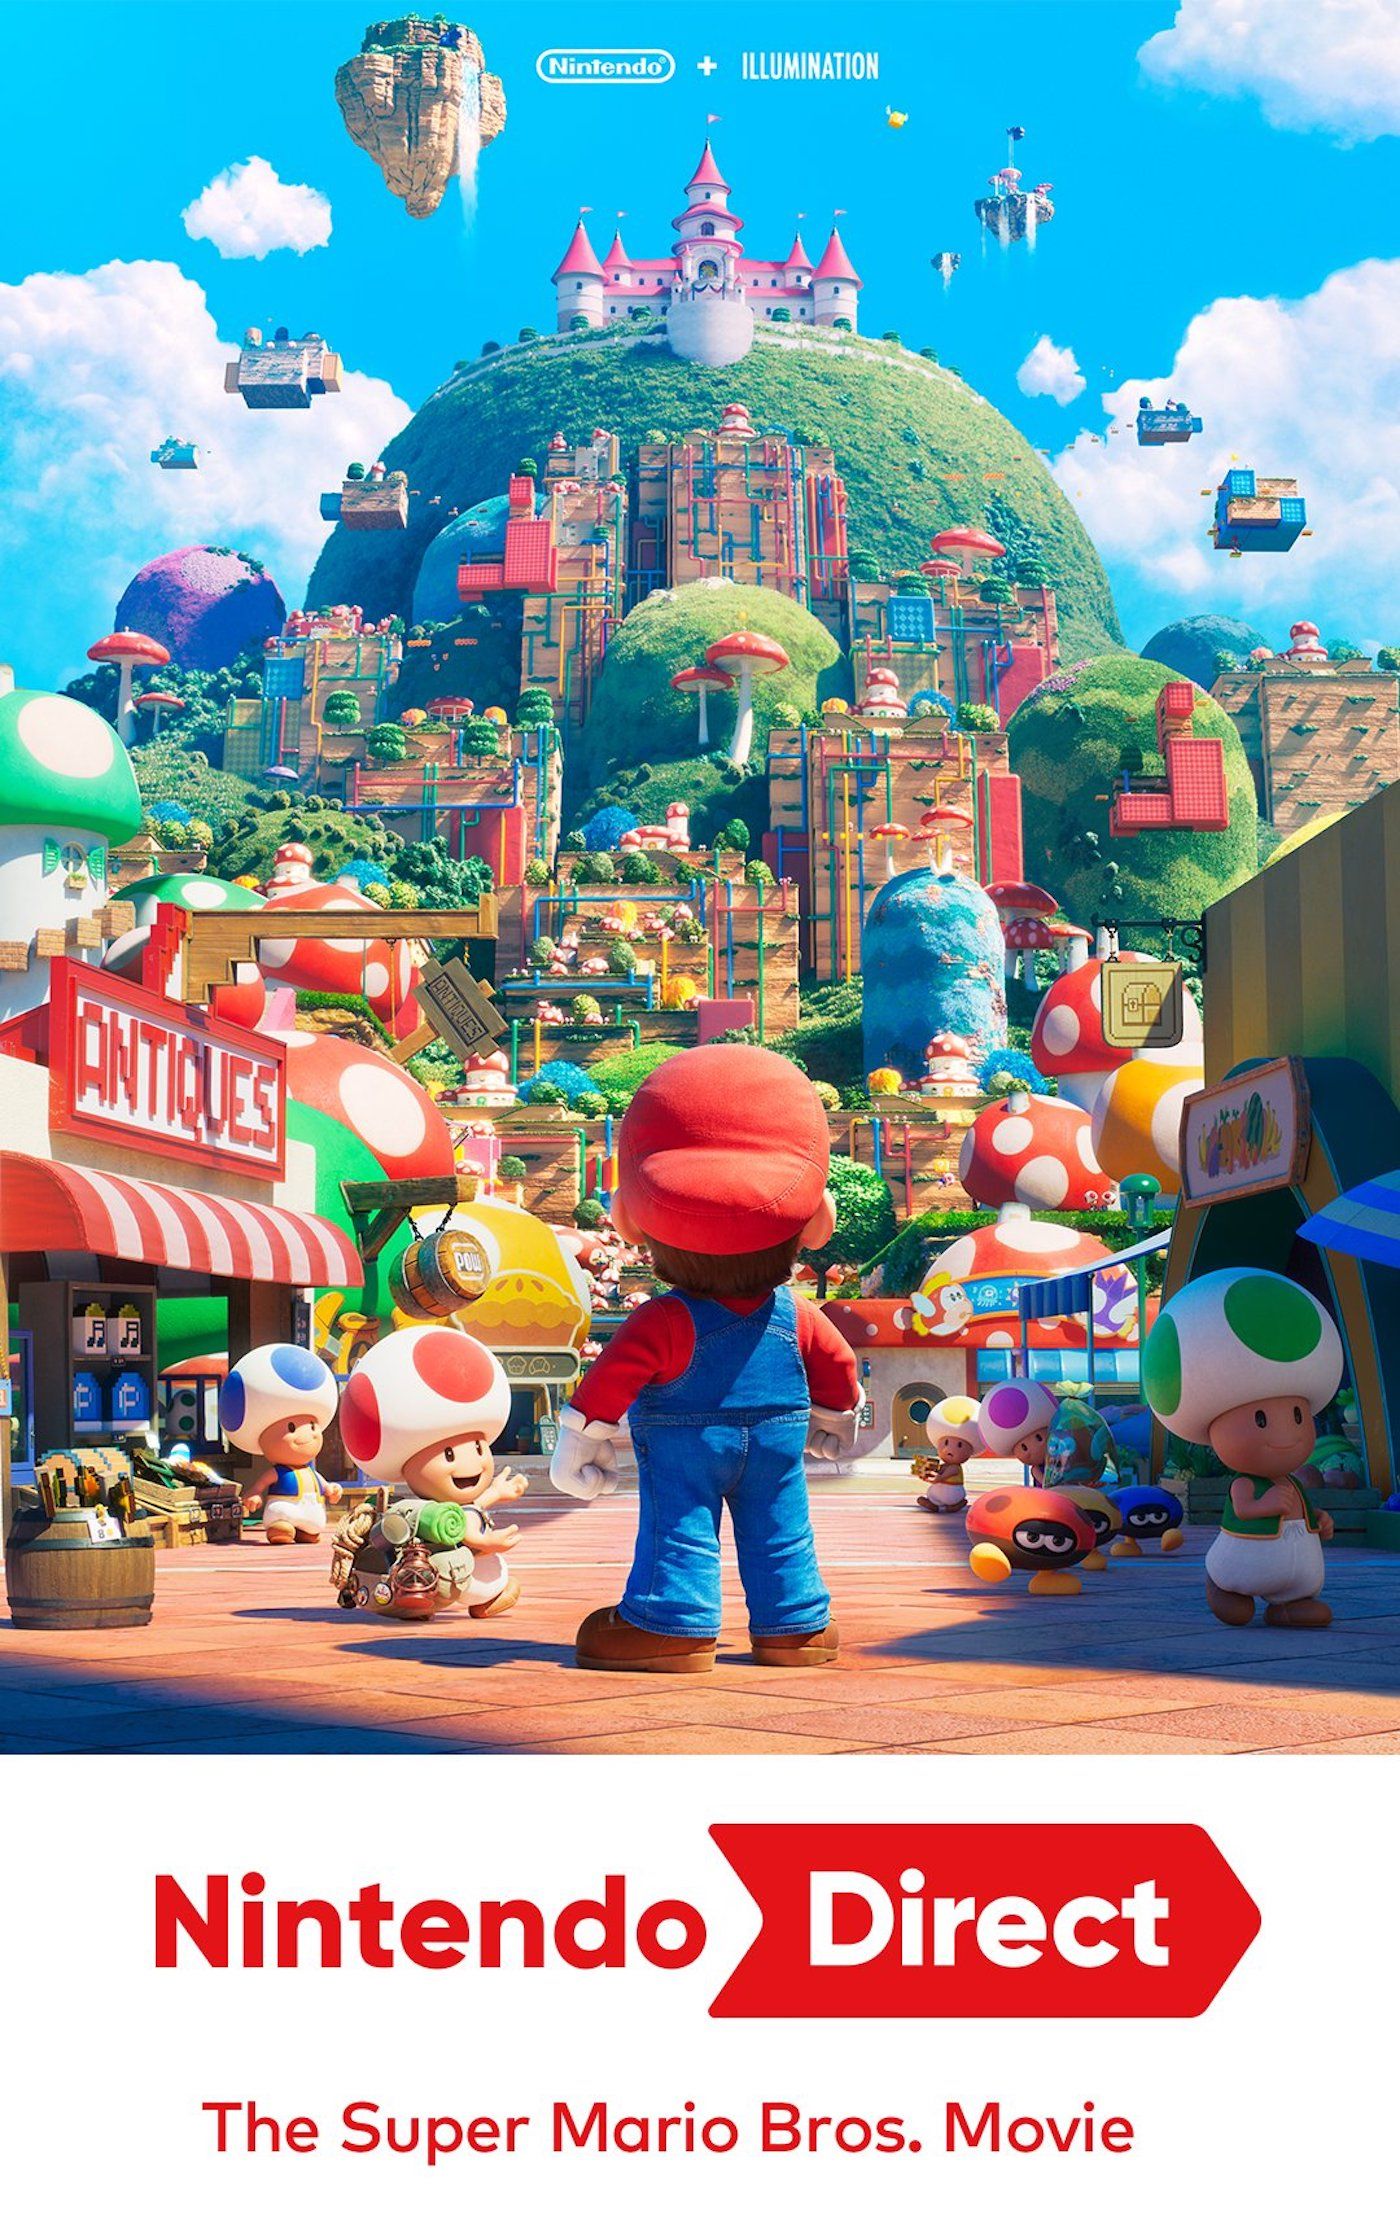 Super Mario Bros. Poster Reveals First Look At Movie's 3D Mario Design